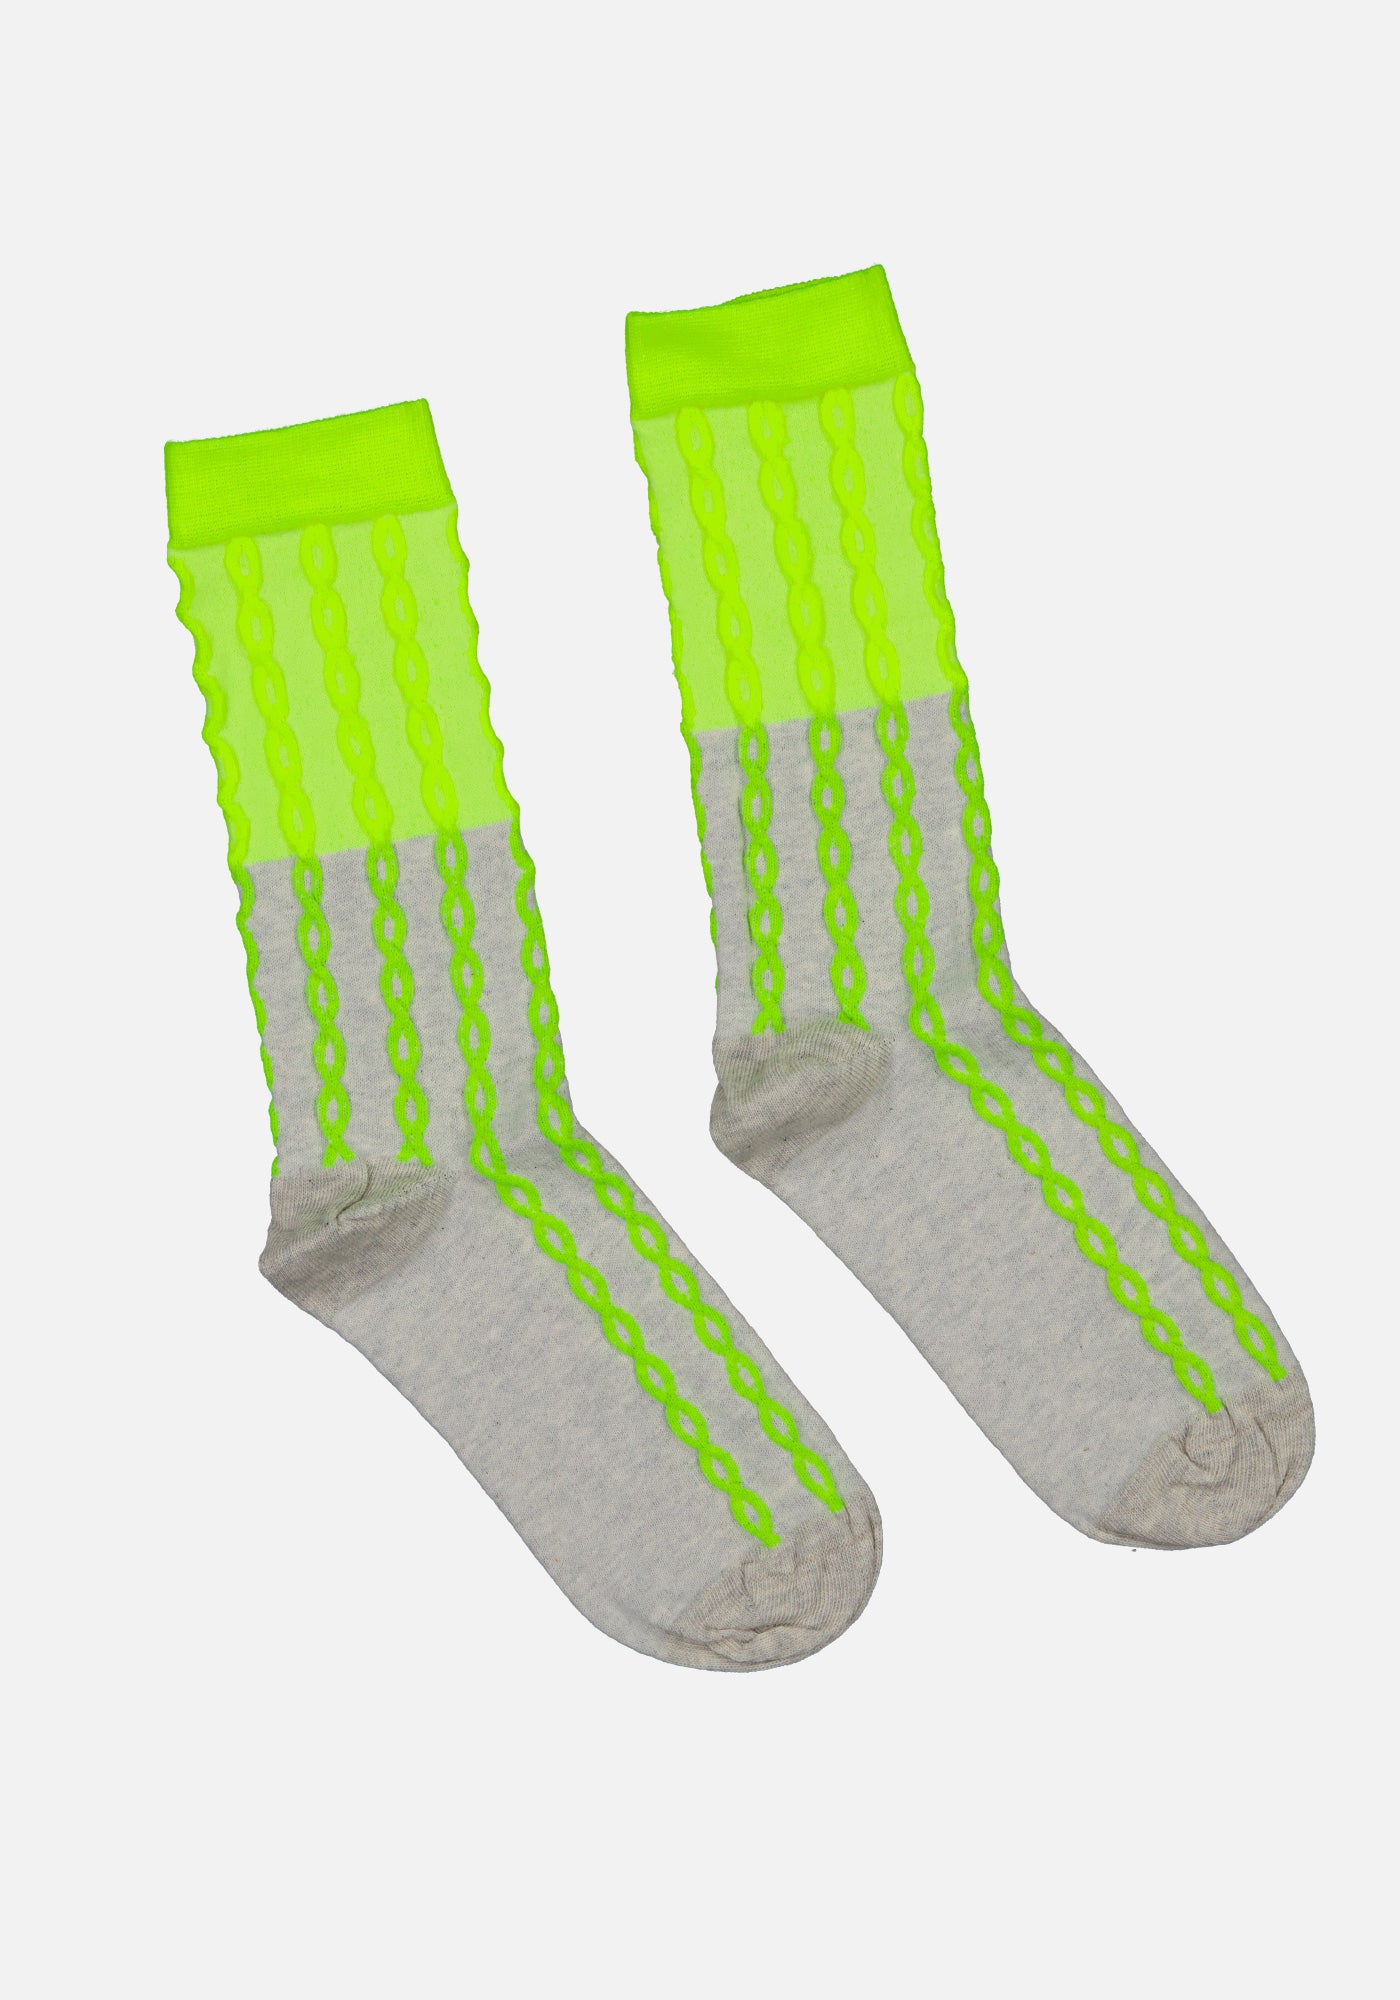 Neon Yellow Flash Socks